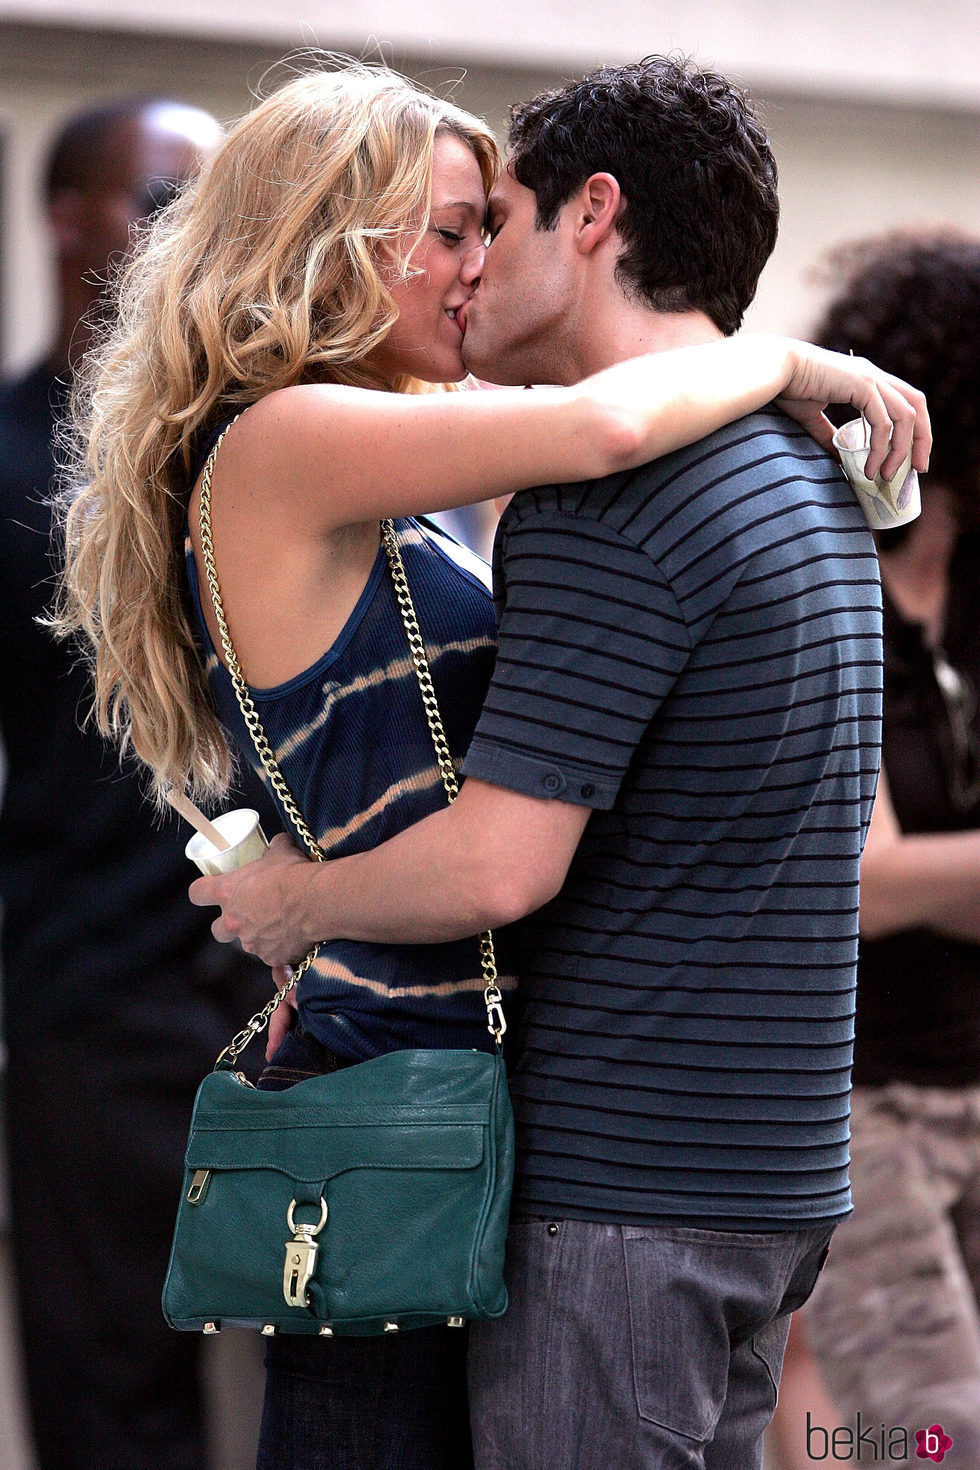 Blake Lively y Penn Badgley besándose en el rodaje de 'Gossip Girl'